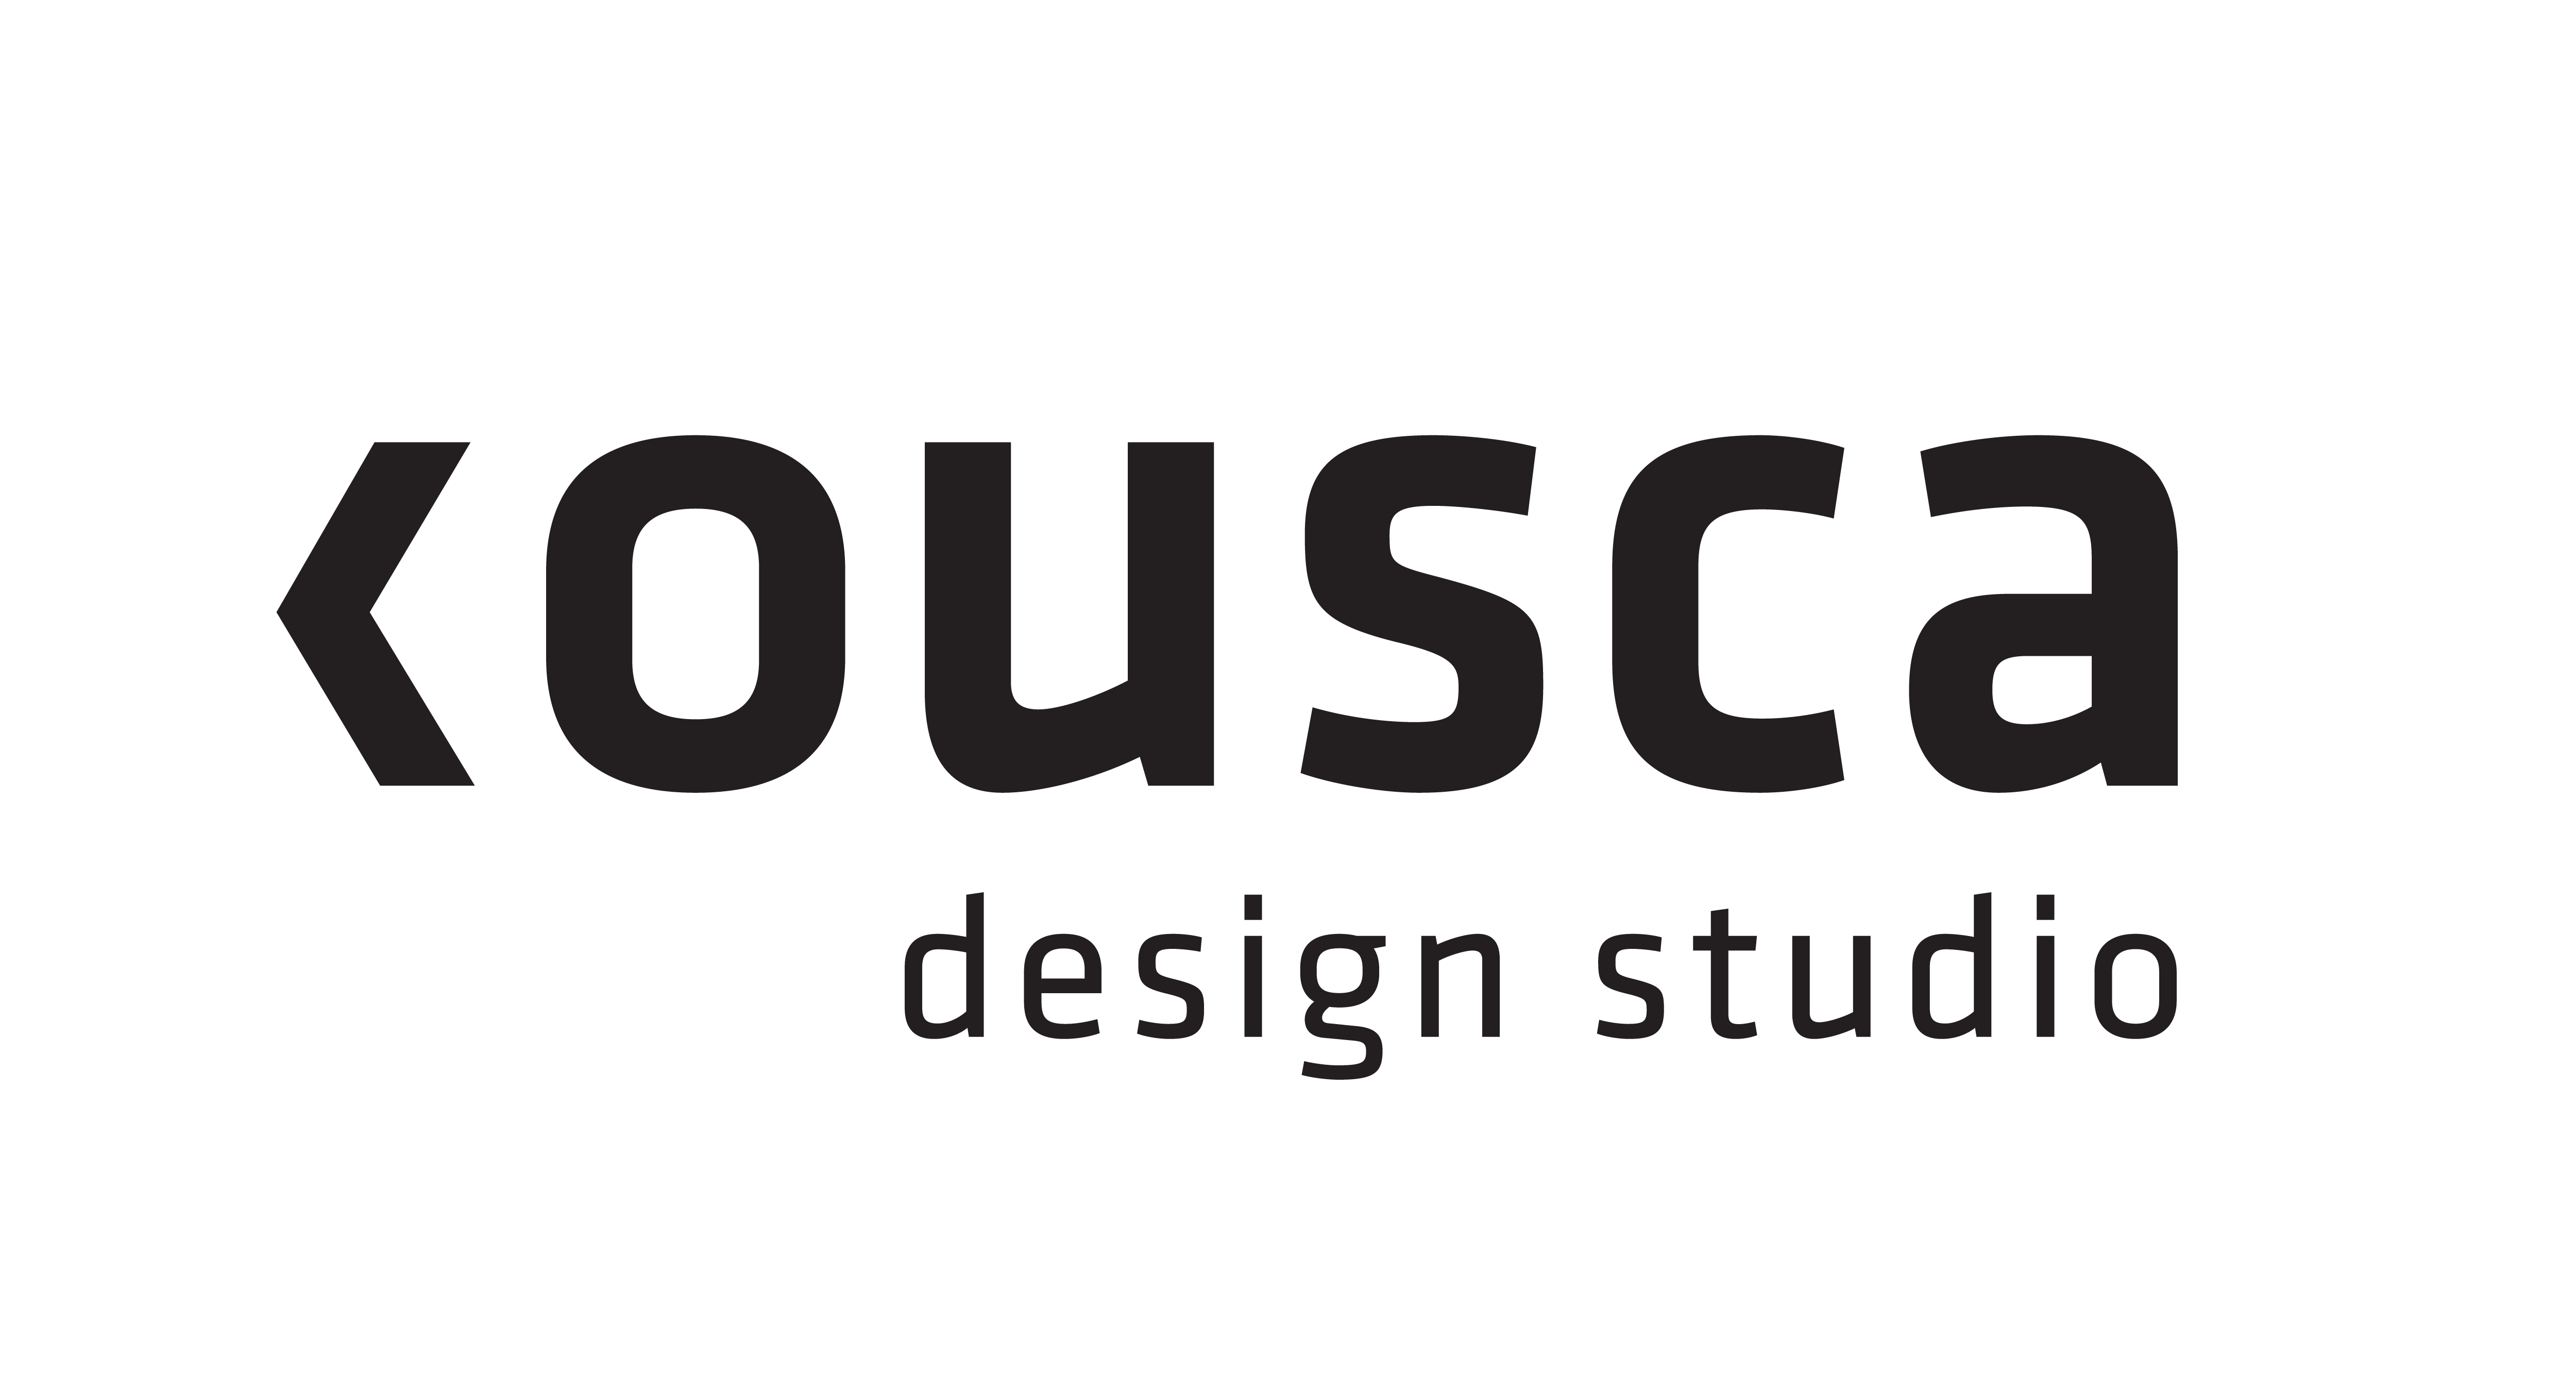 Kousca Design Studio